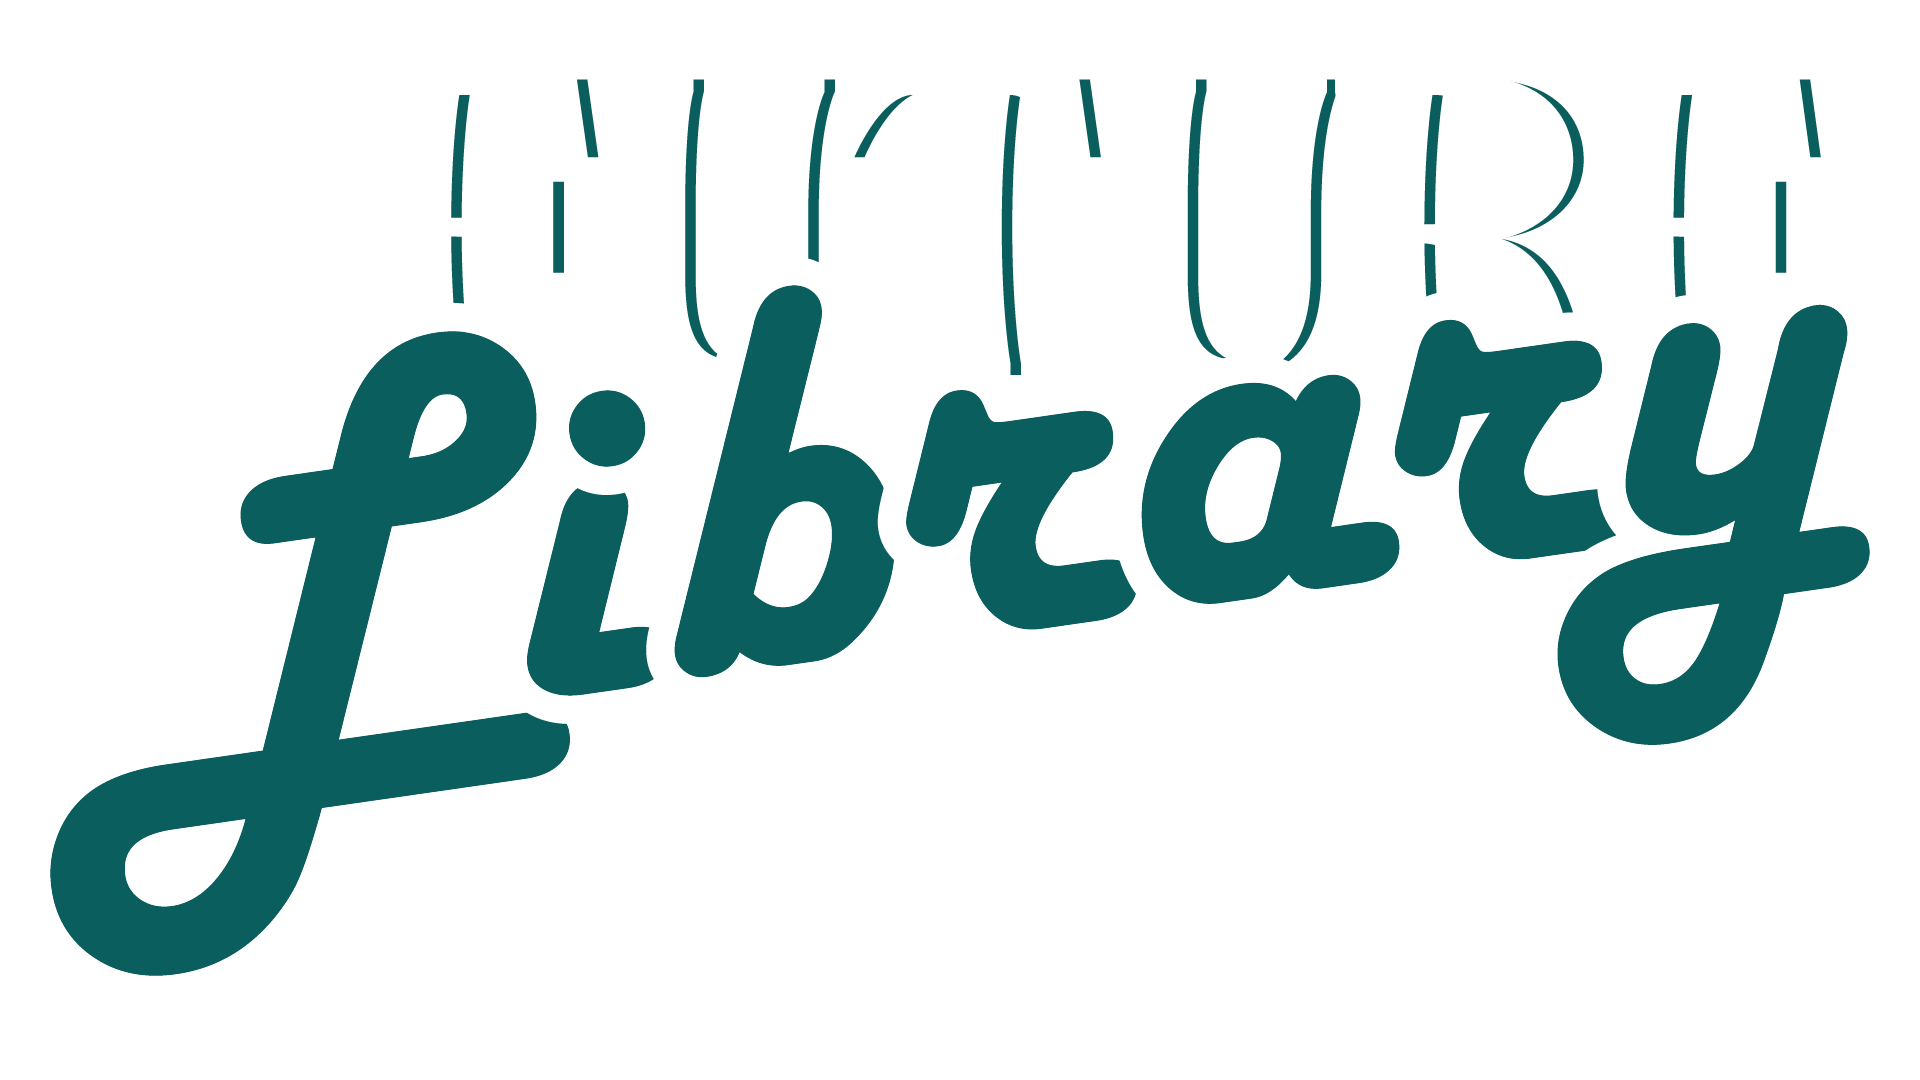 FutureLibrary